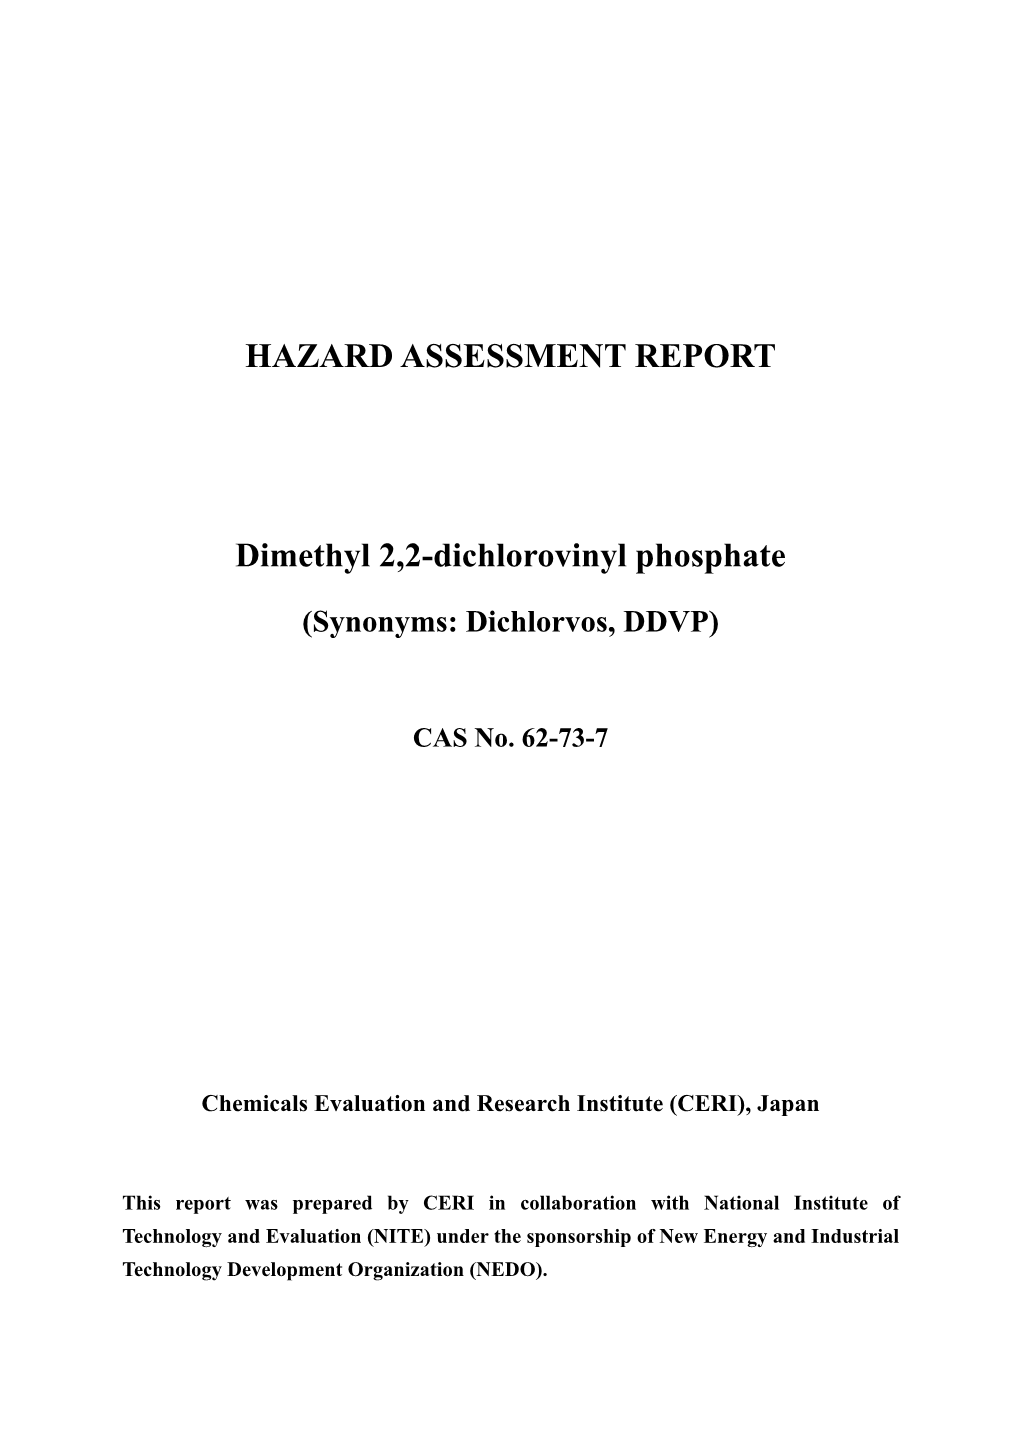 HAZARD ASSESSMENT REPORT Dimethyl 2,2-Dichlorovinyl Phosphate